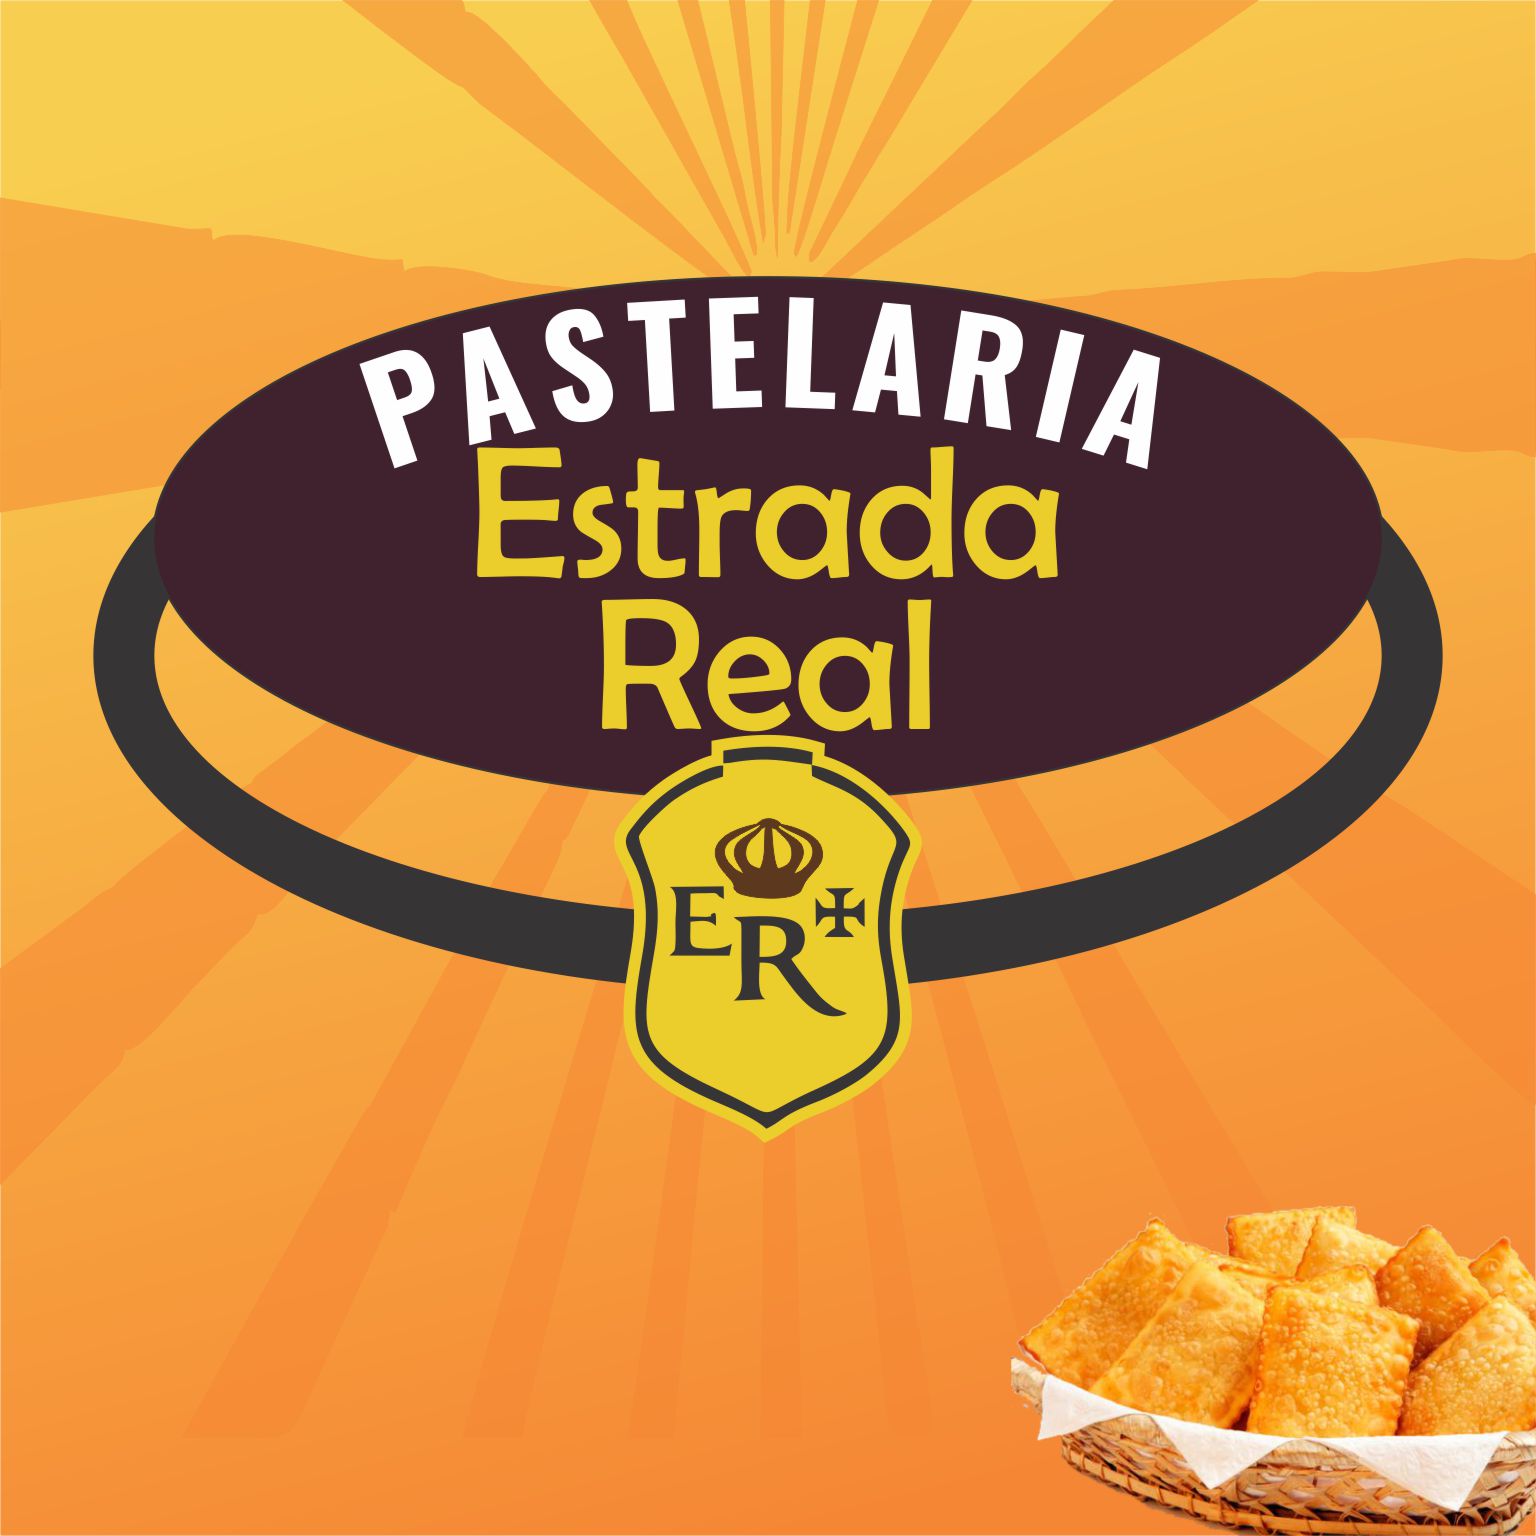 Pastelaria Estrada Real